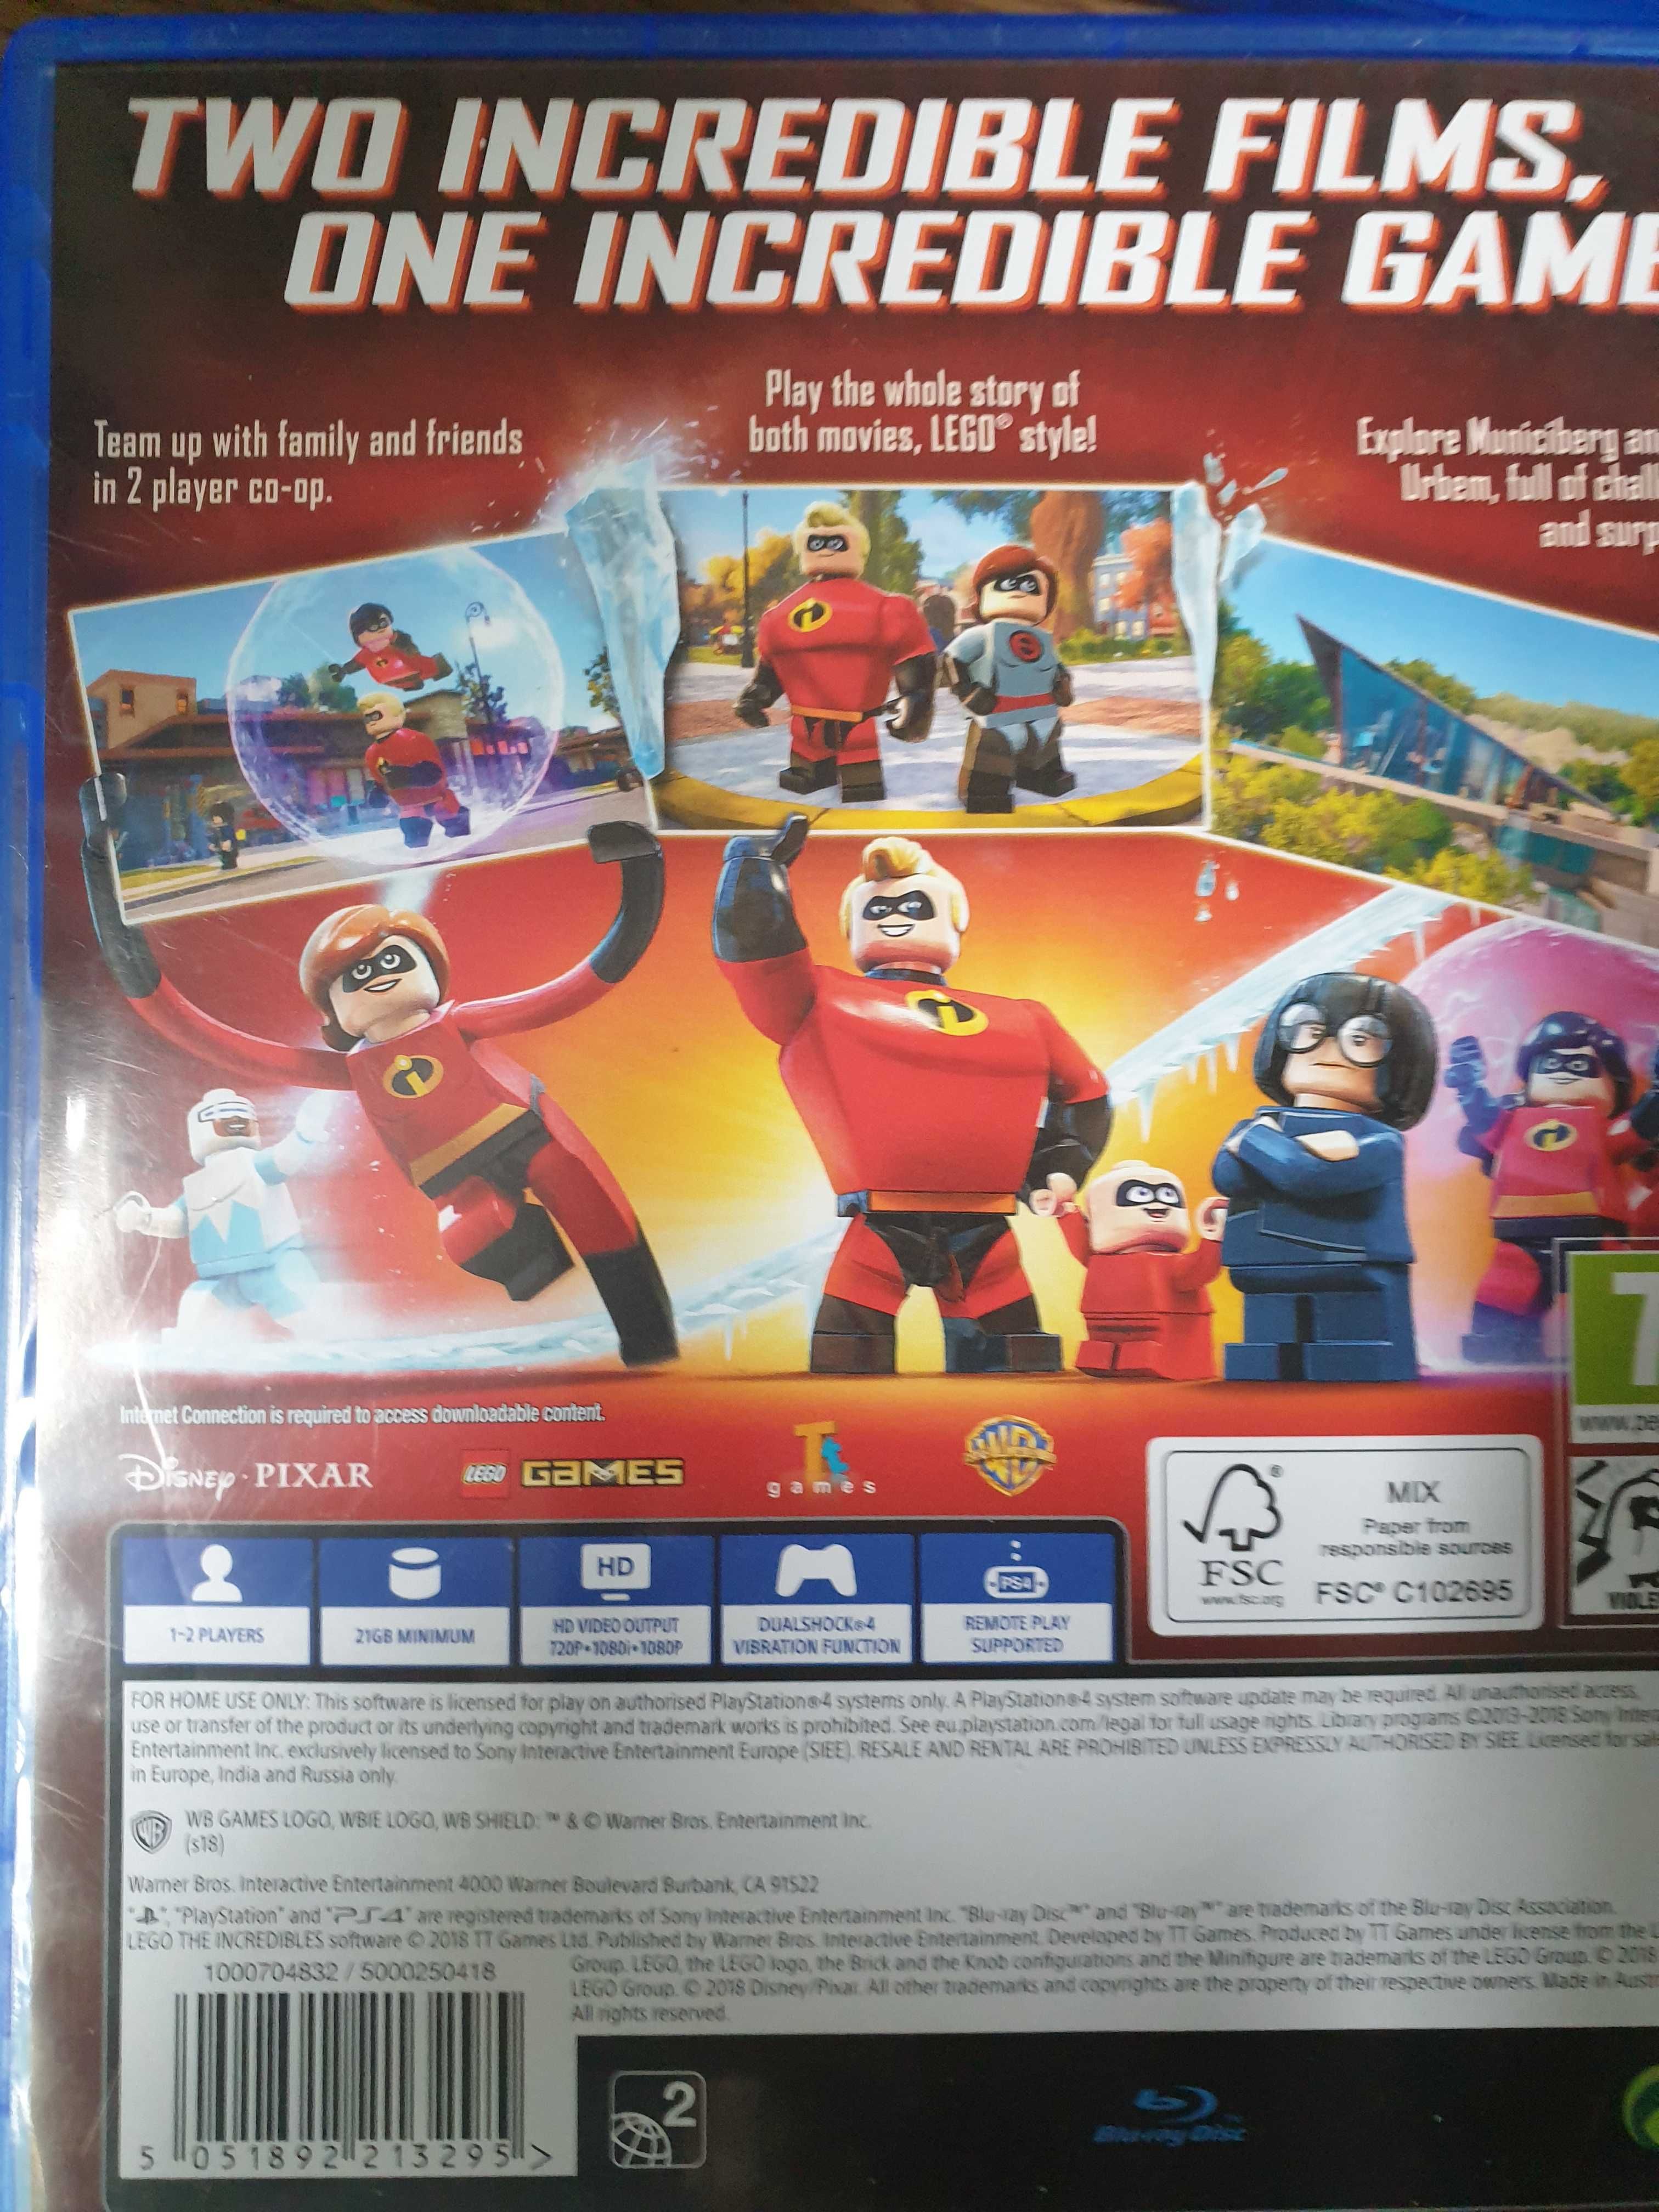 LEGO Disney Pixar's The Incredibles Iniemamocni PS4